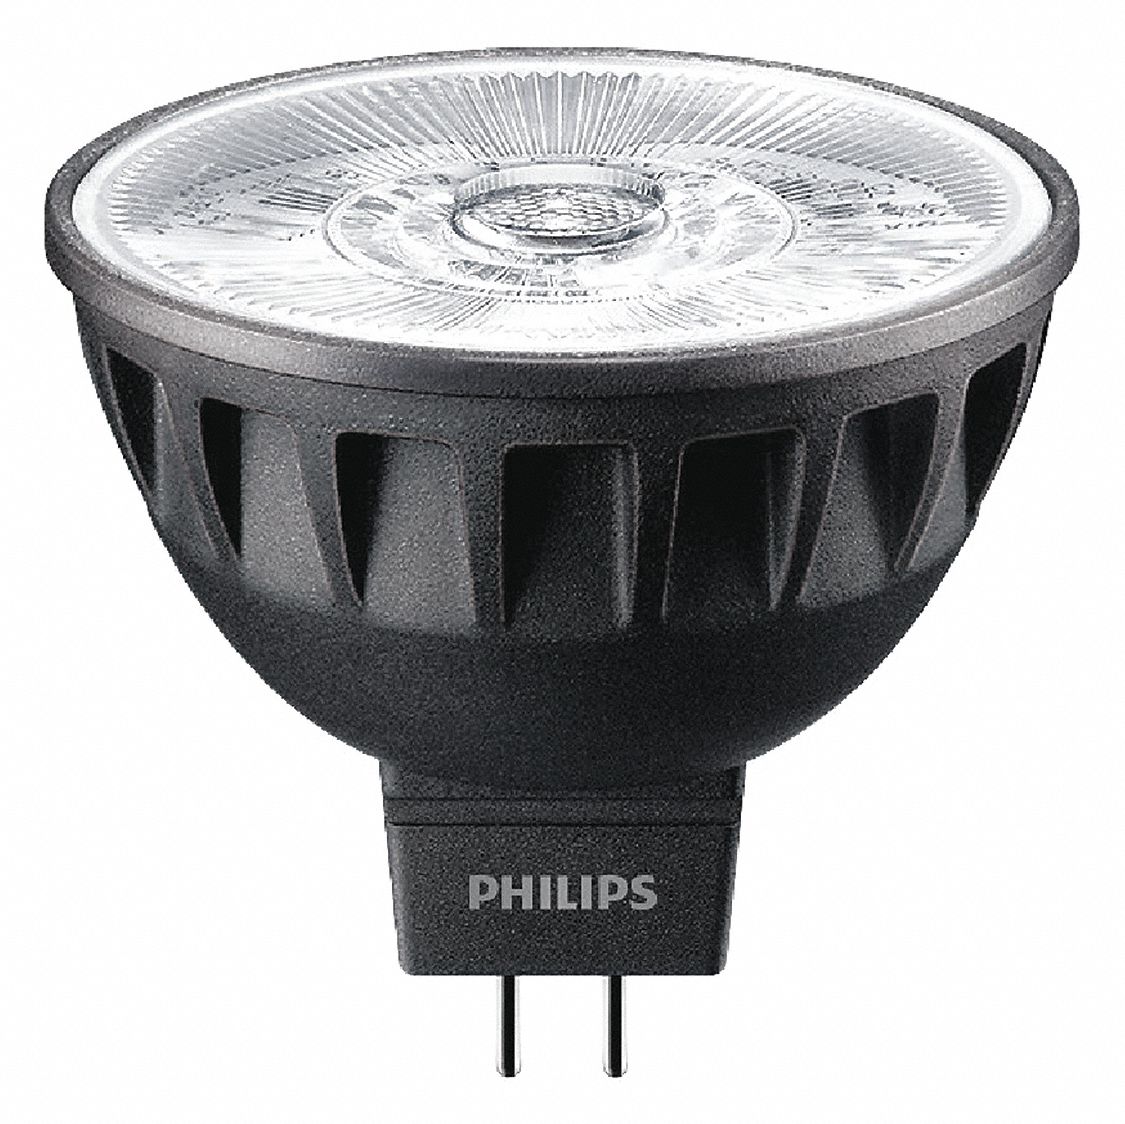 Philips Lot de 6 ampoules halog/ènes /écologiques GLS GLS BC B22 B22d A55 220-240/ V